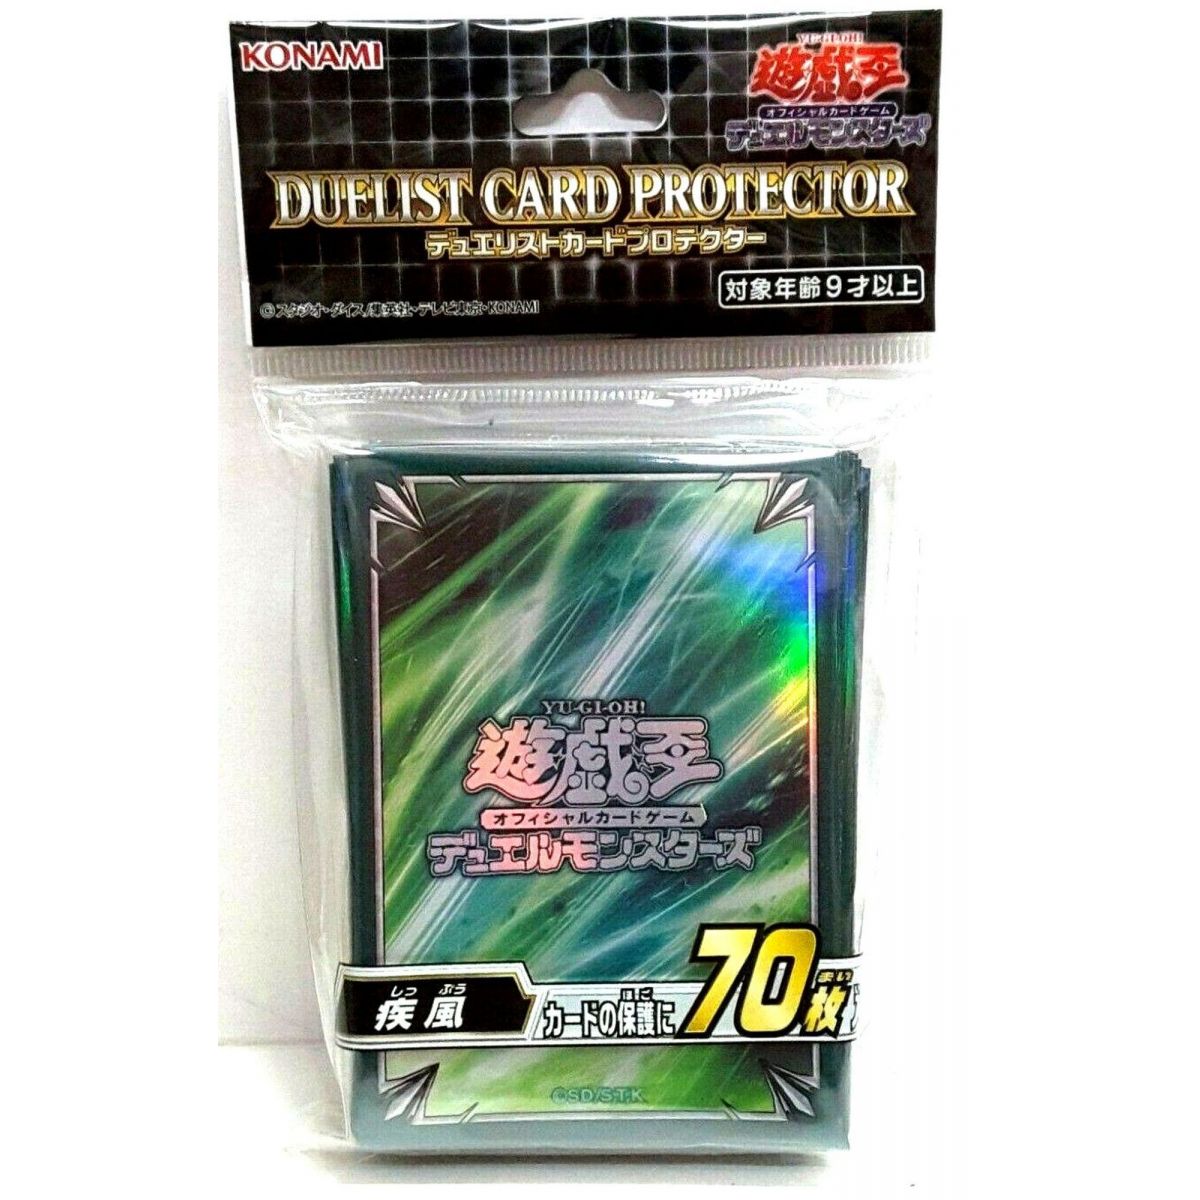 Item Yu Gi Oh! - Card Protectors - Konami Strong Wind Duelist Card Protector (70) - OCG